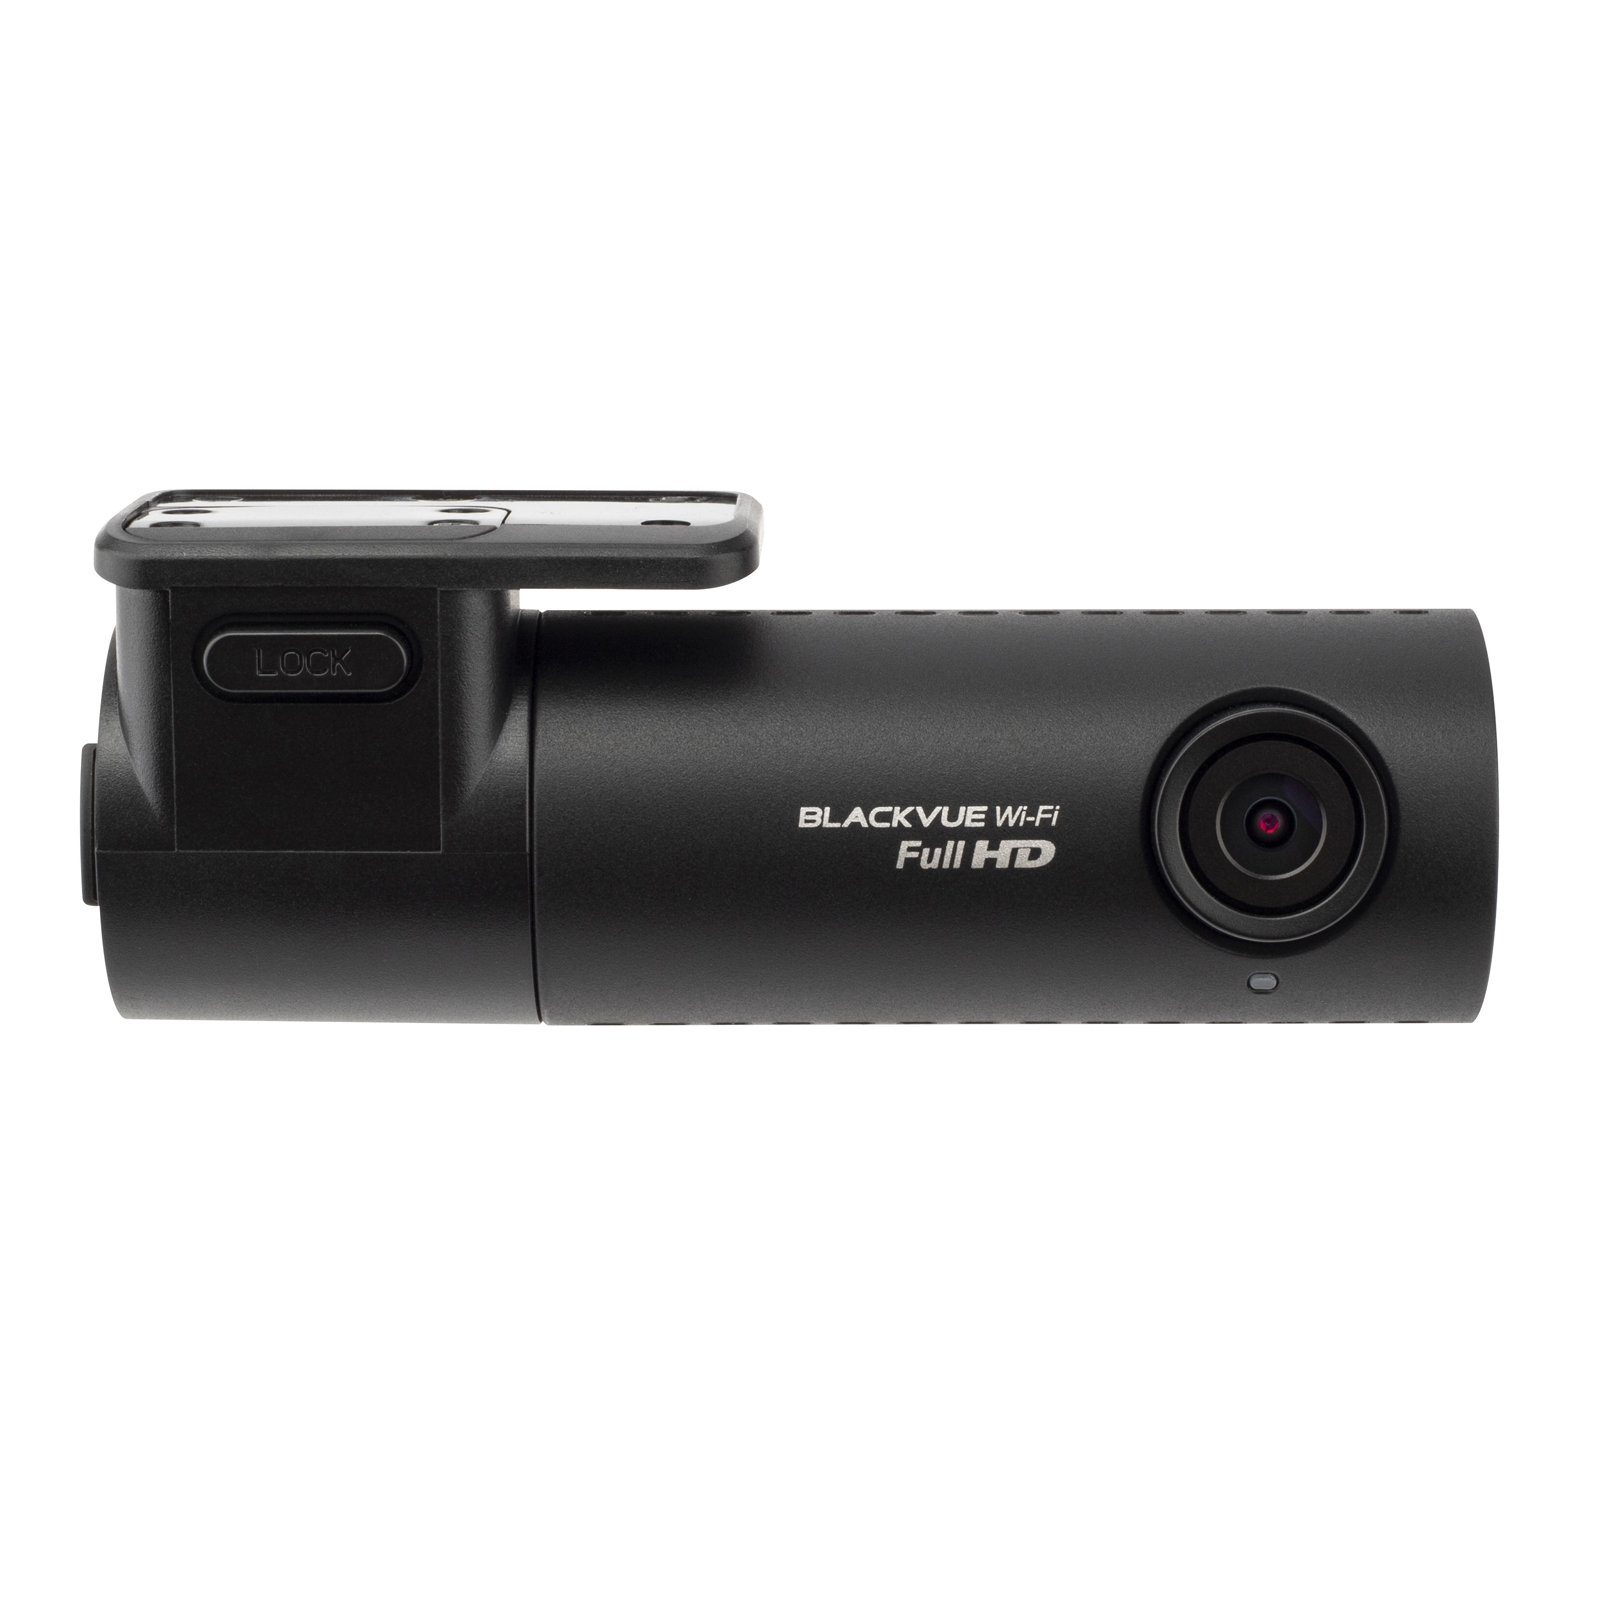 Full Dashcam WLAN HD 256GB DR590X-1CH Dashcam BlackVue BlackVue